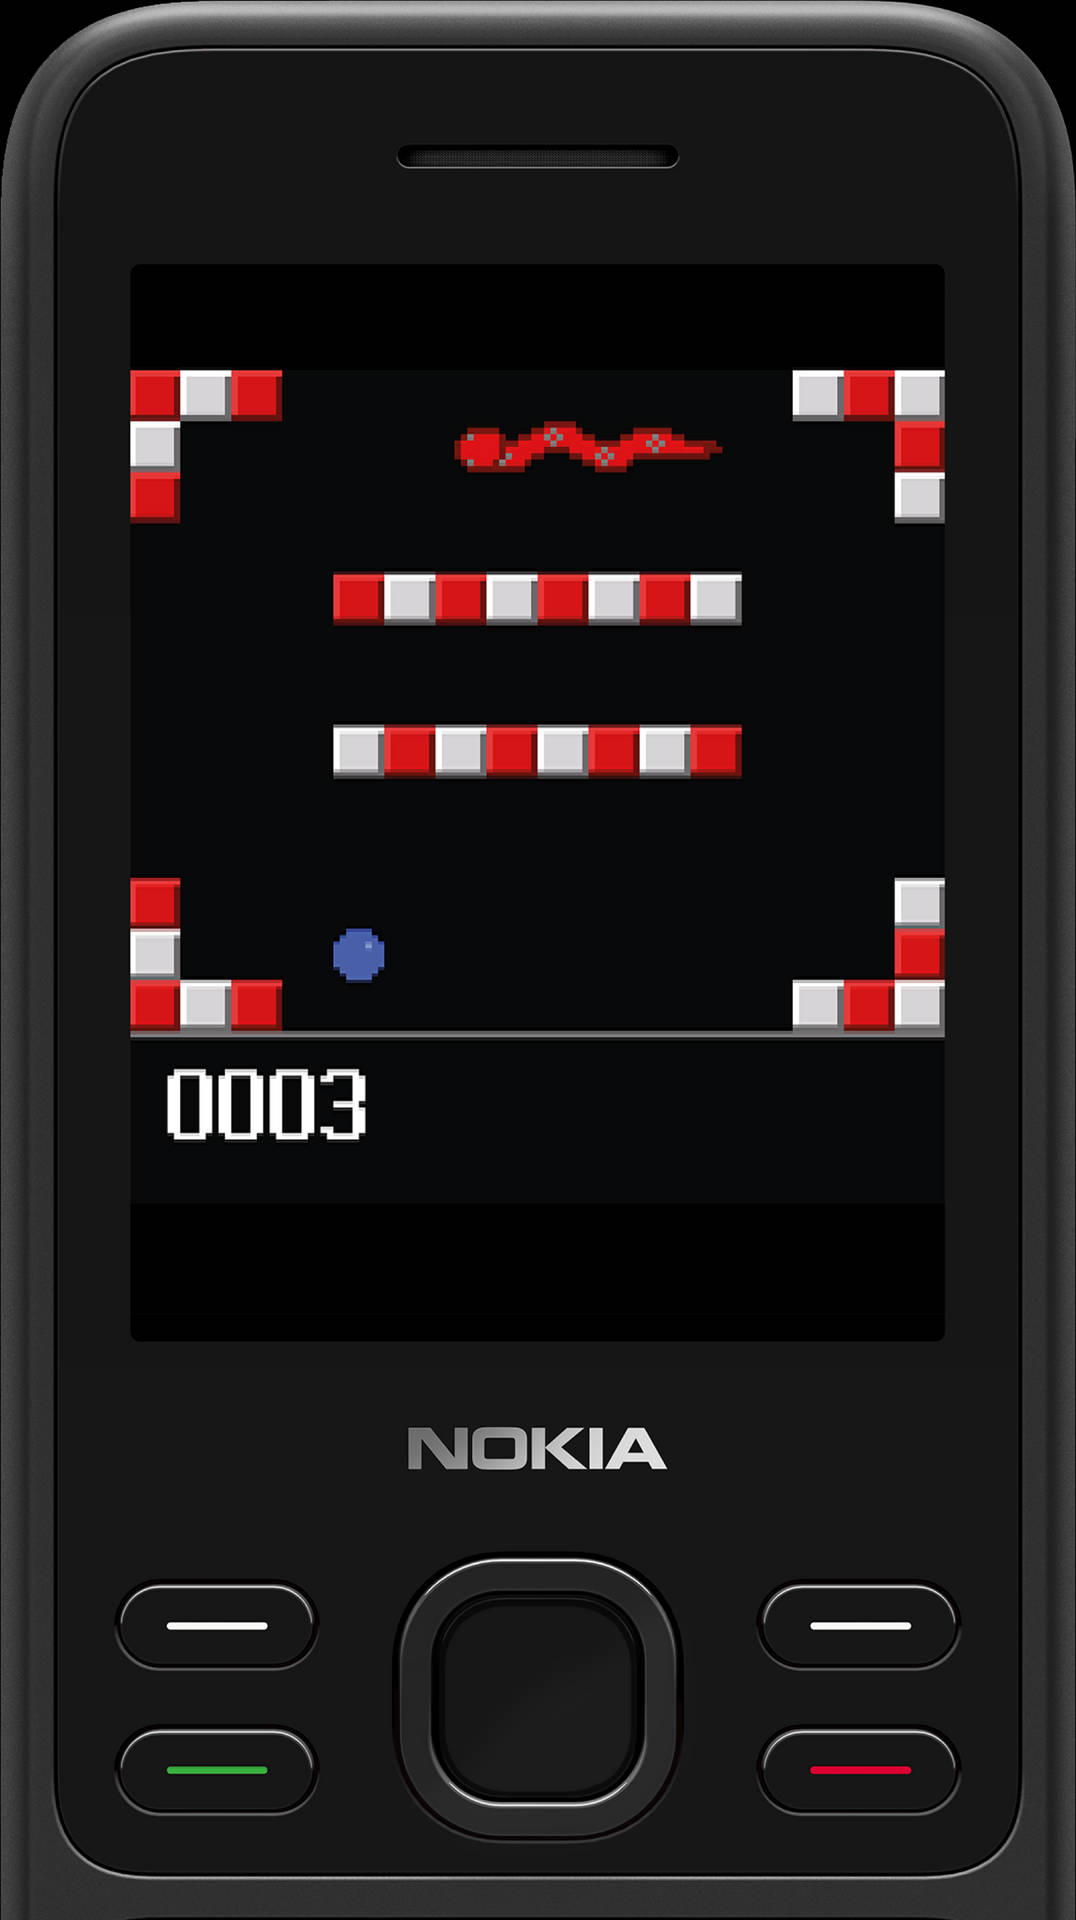 Snake Game On Nokia Phone Background